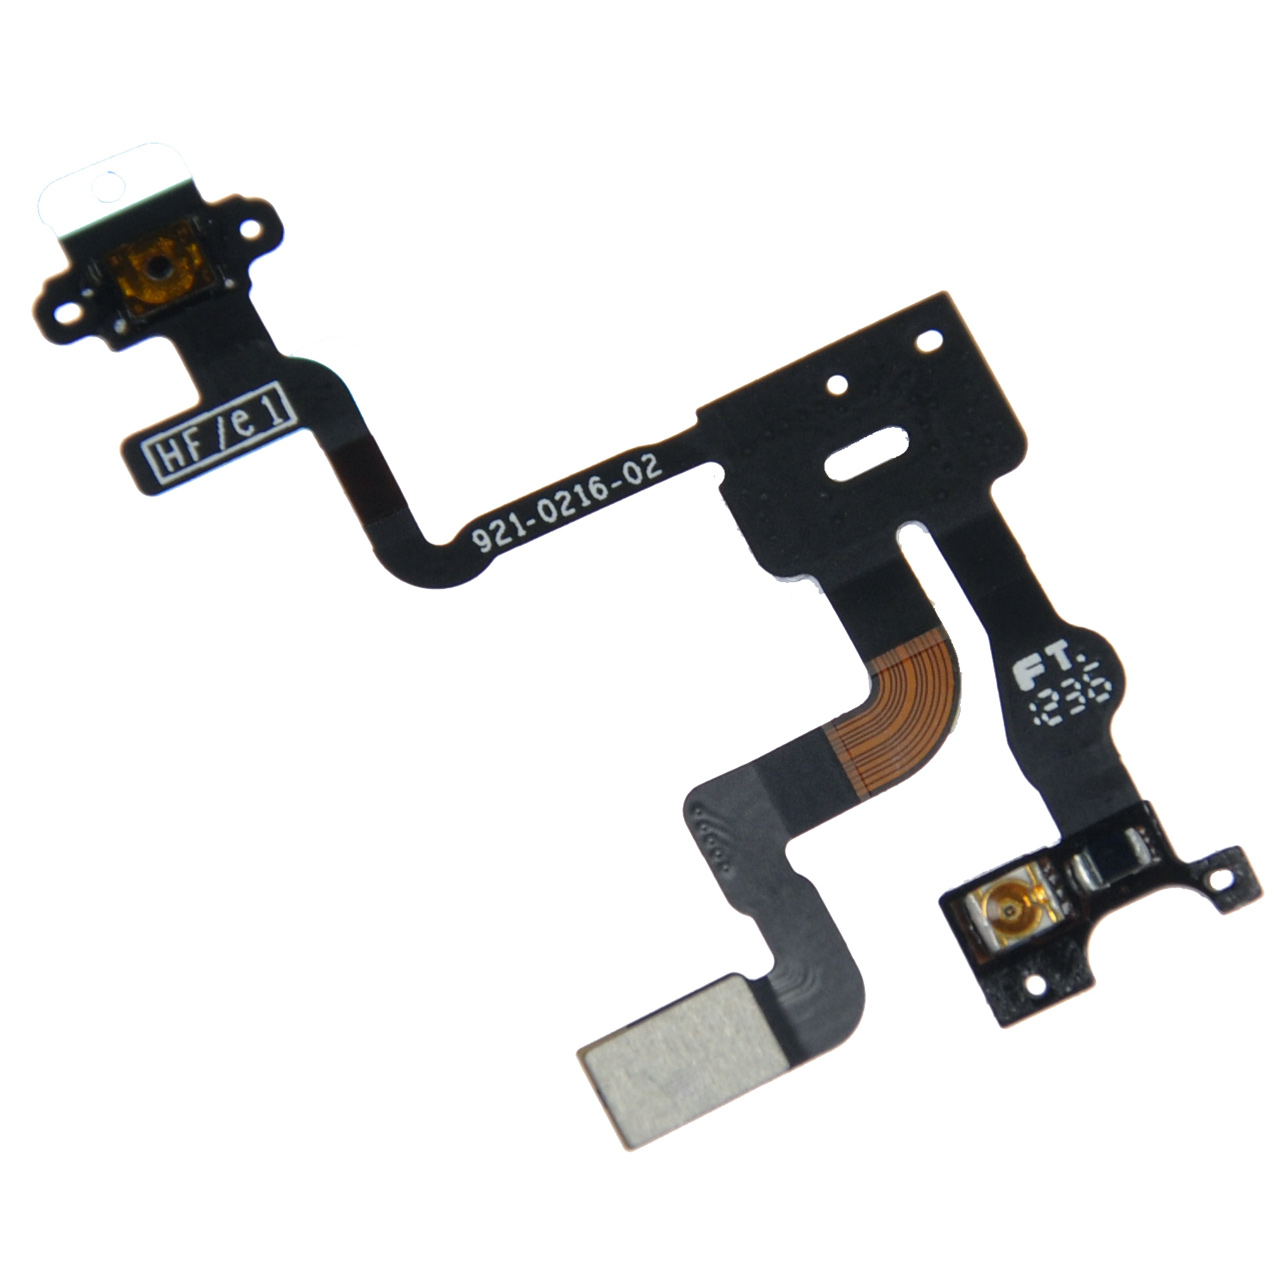 Apple iPhone 4S sensor cable